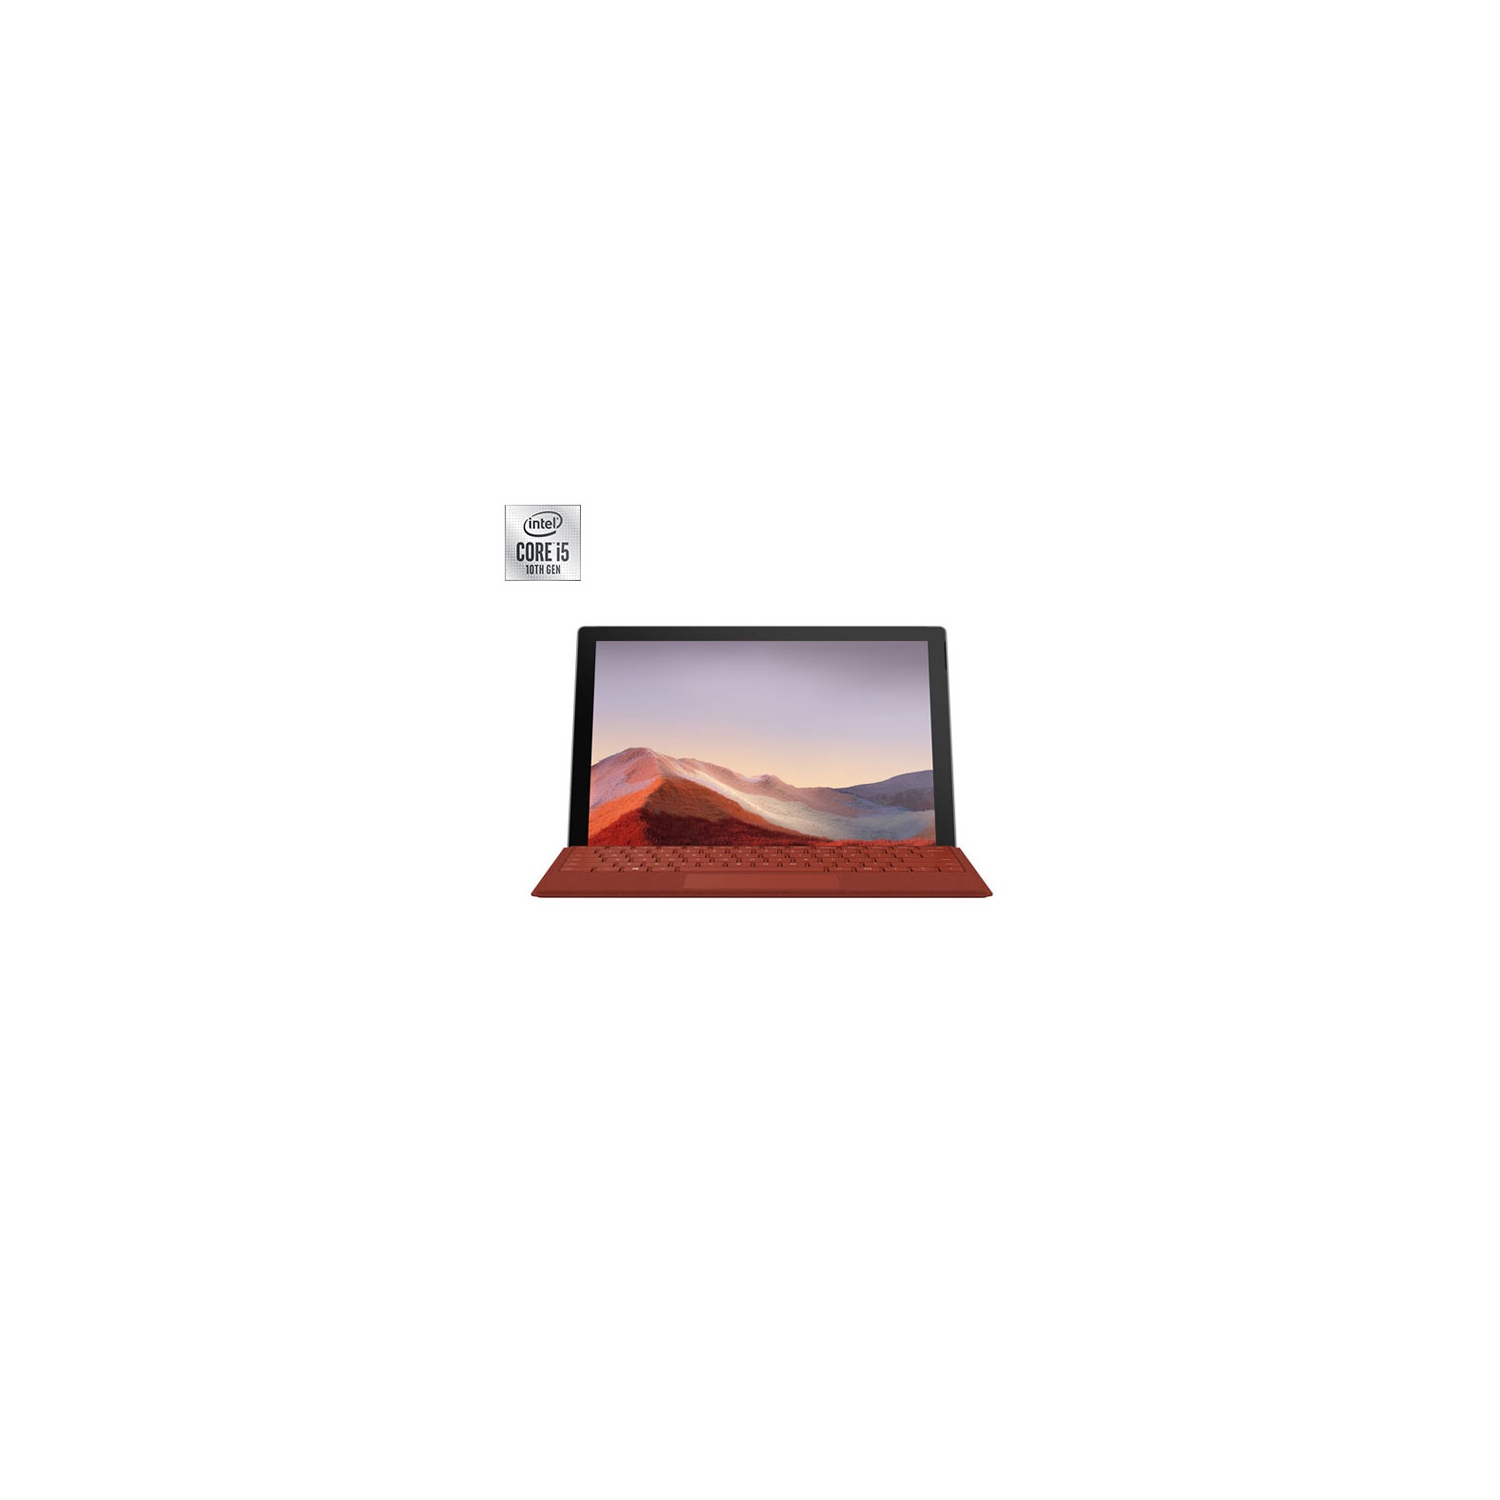 Refurbished (Good) - Microsoft Surface Pro 7 12.3" 128GB Windows 10 Tablet With 10th Gen Intel Core i5/8GB RAM - Platinum